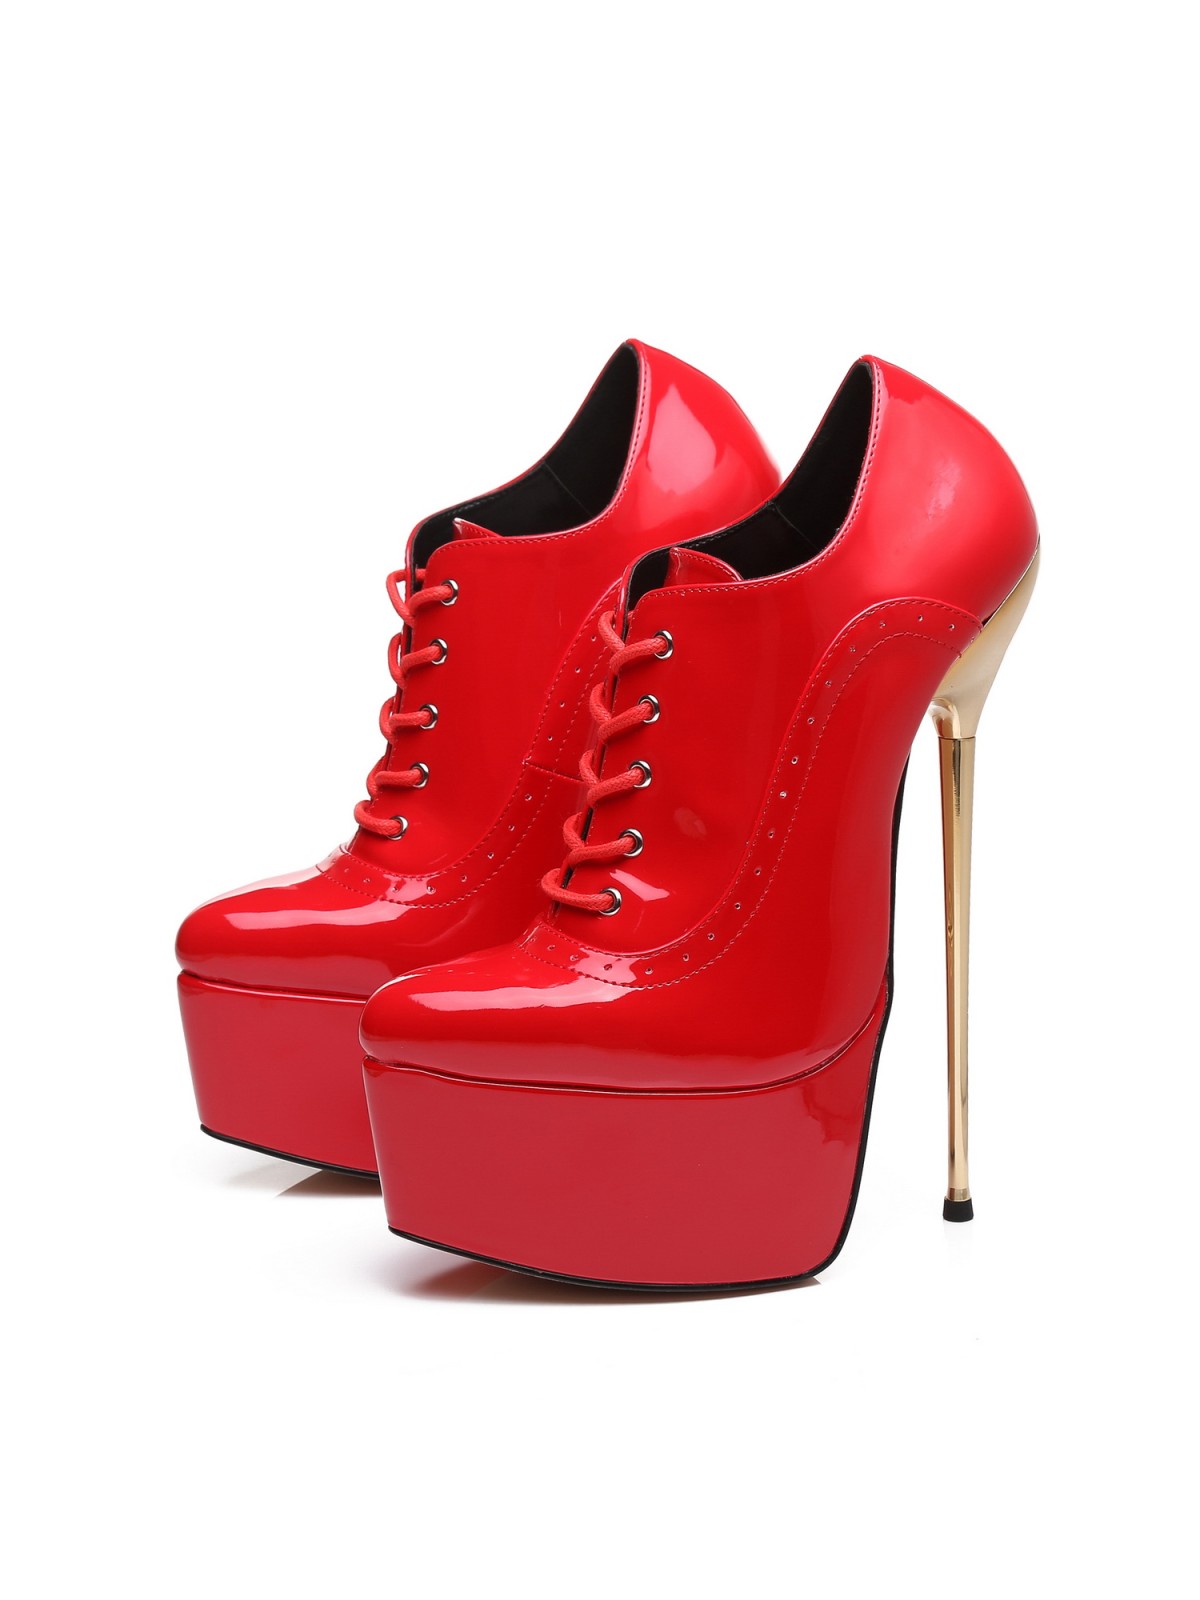 Slick HYPNOTIC red shiny ankle platform boots